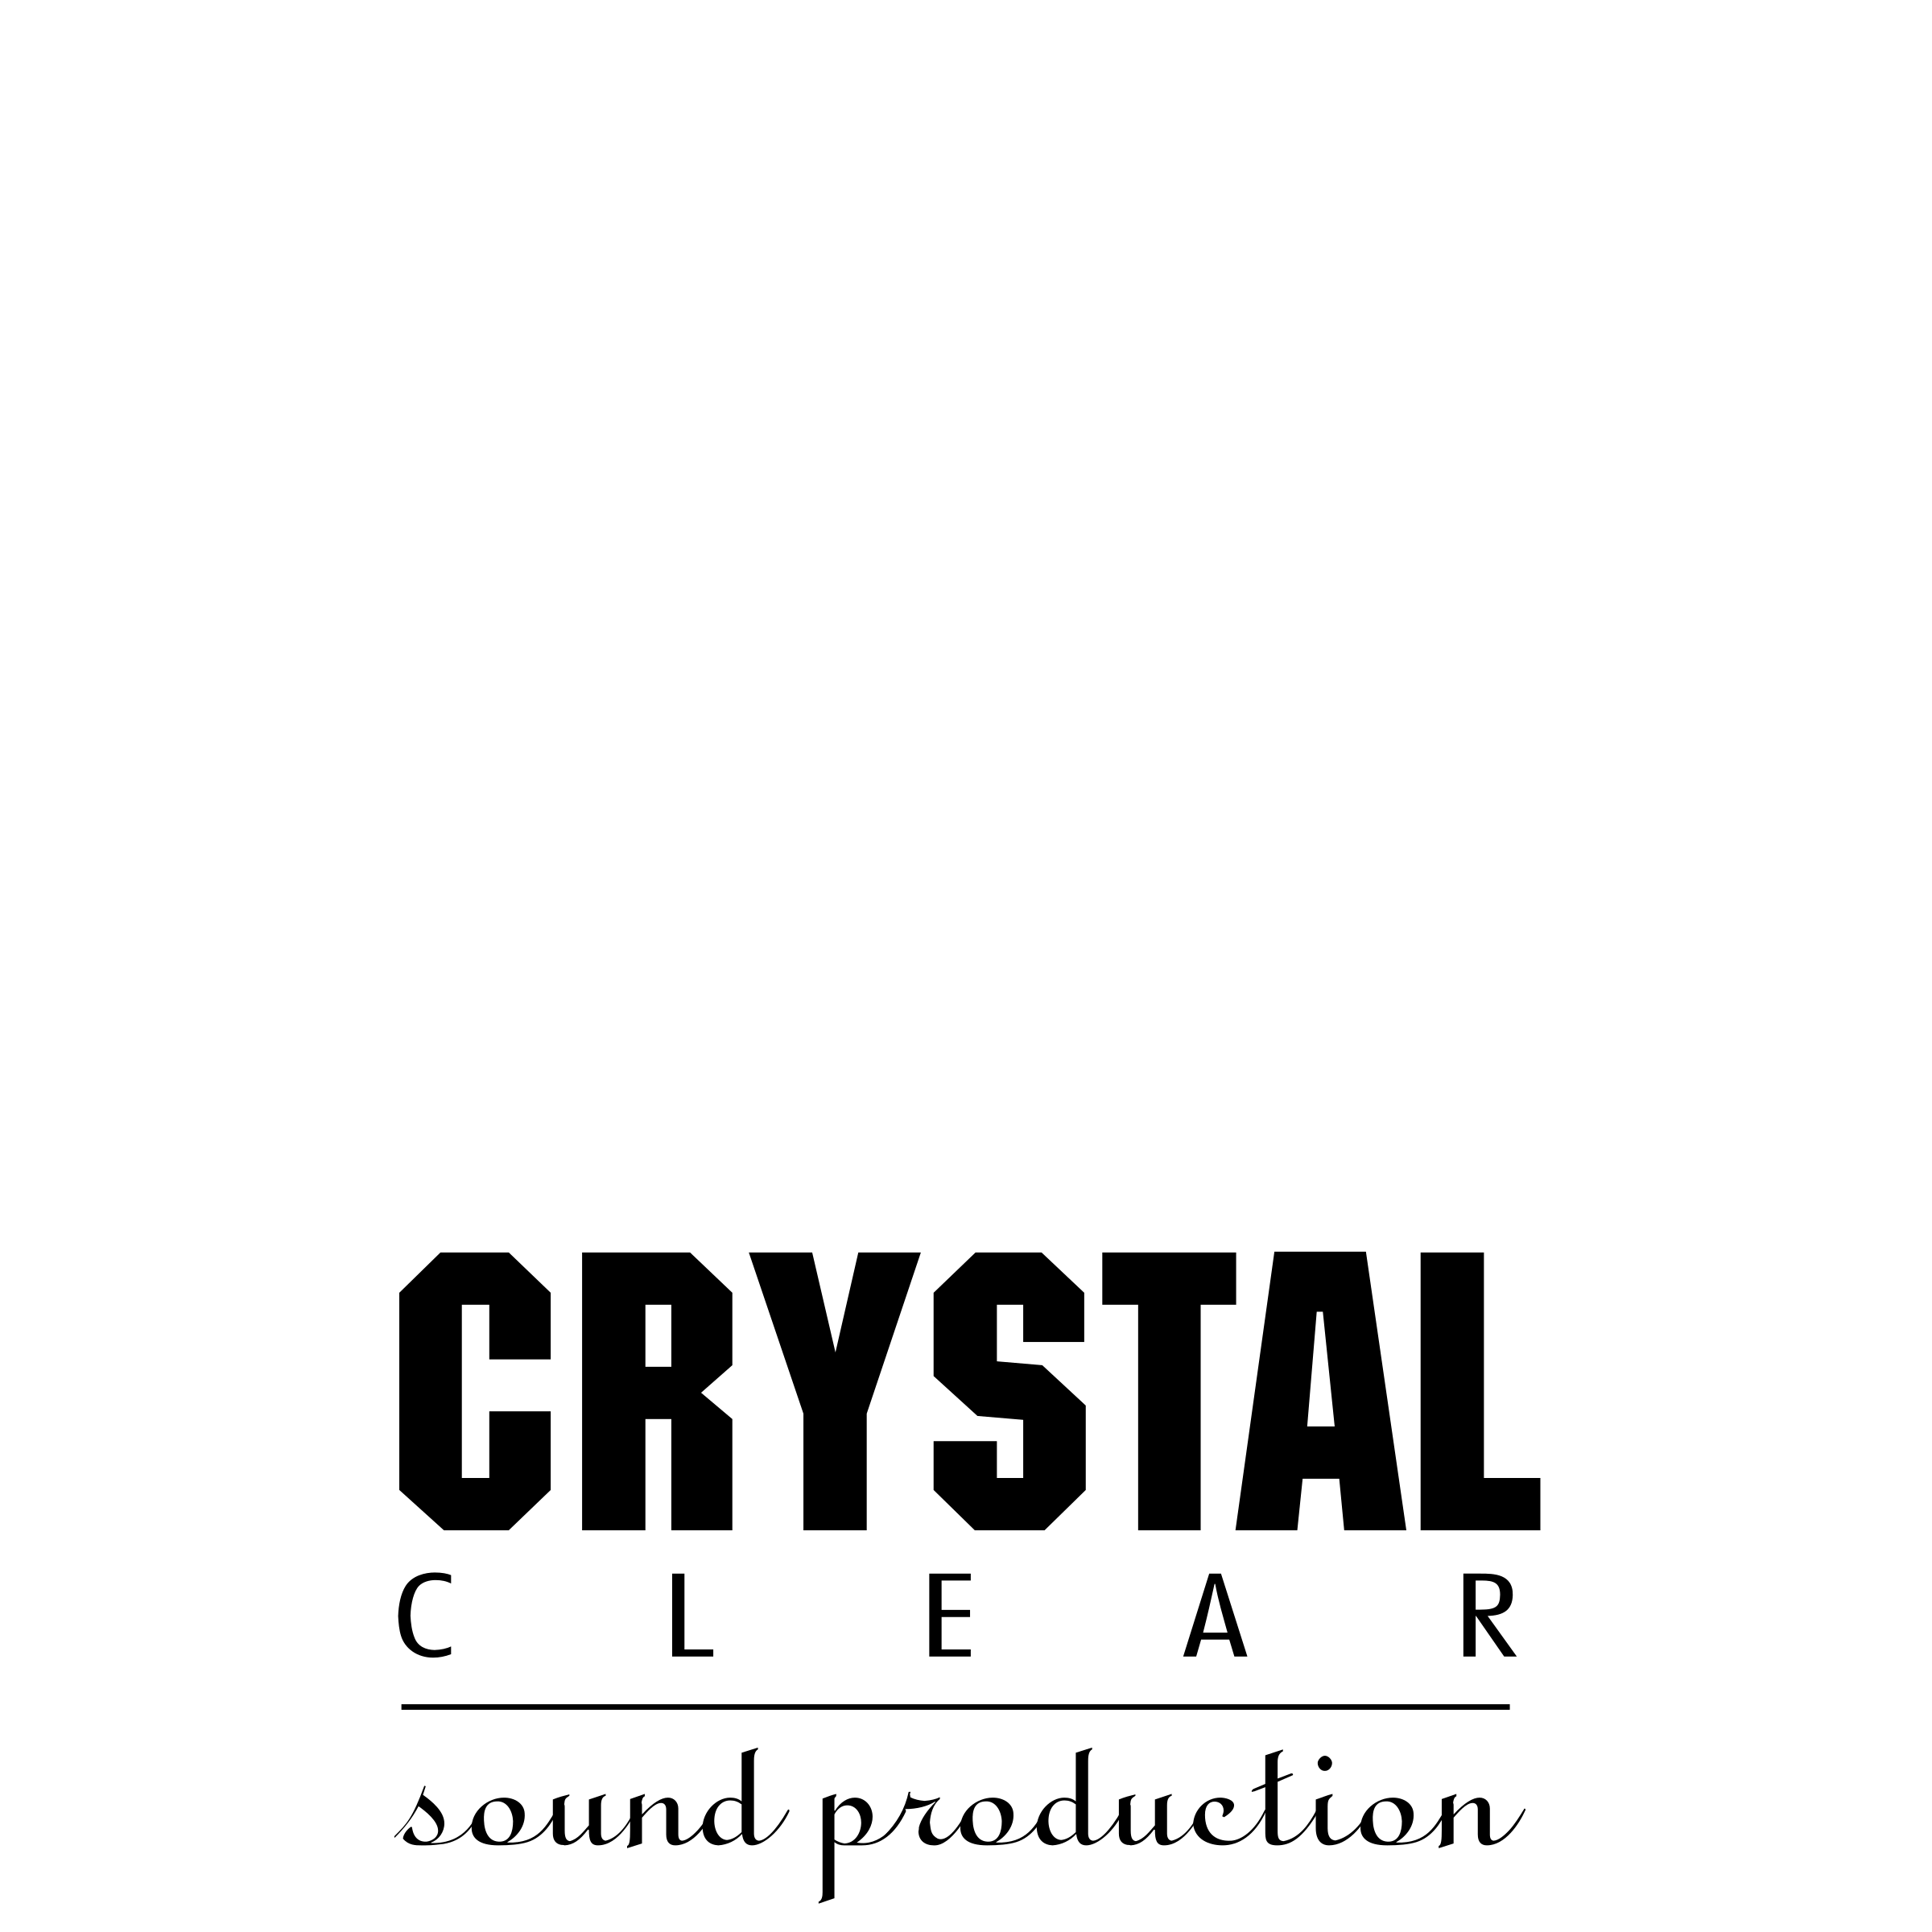 Crystal Clear Logo - Crystal Clear Logo PNG Transparent & SVG Vector